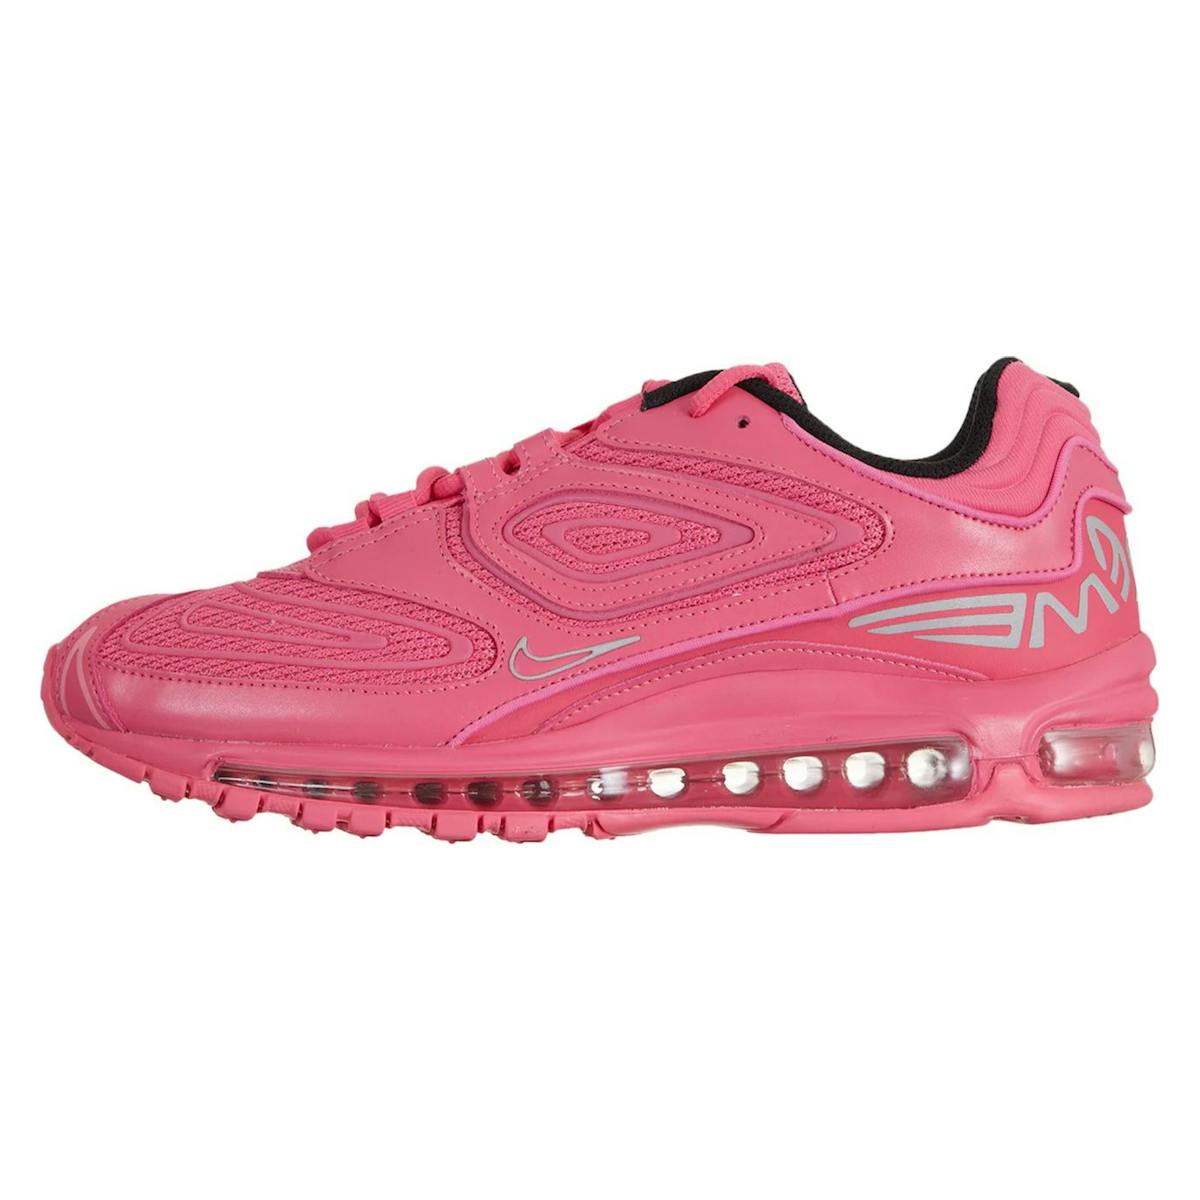 Nike x Supreme Air Max 98 TL Pink